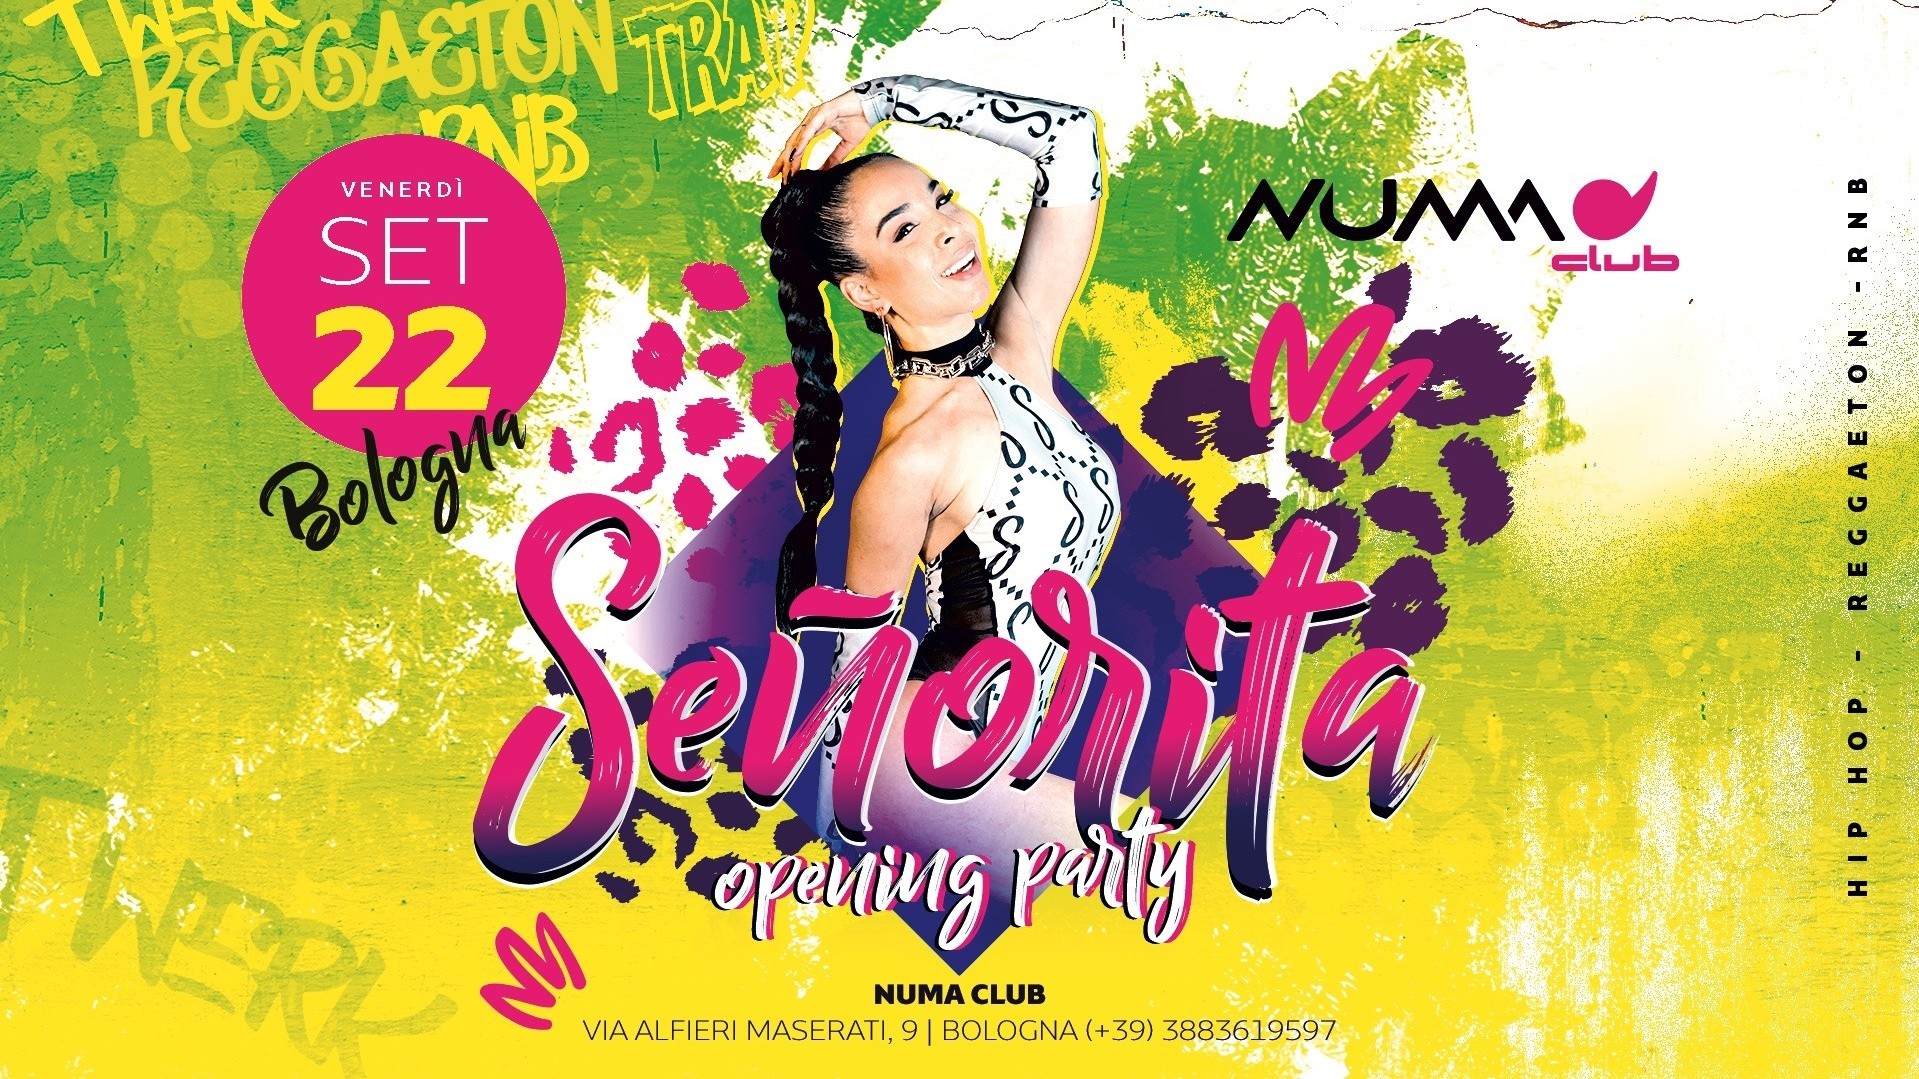 Senorita / Opening Party